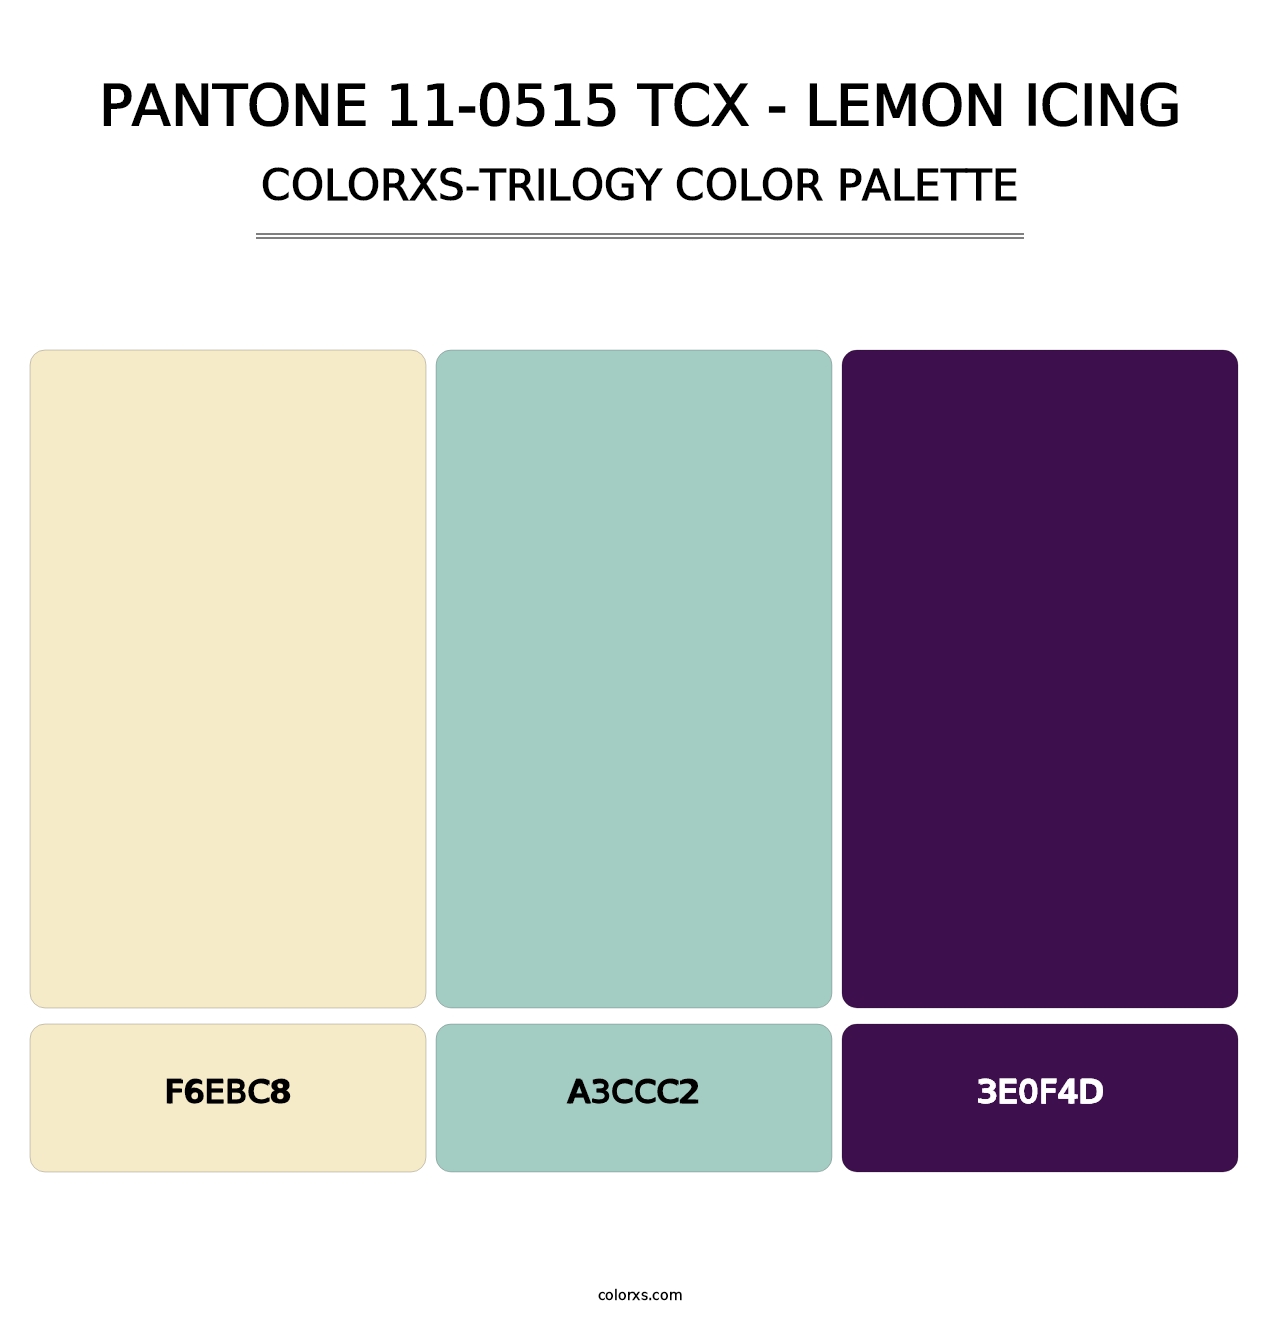 PANTONE 11-0515 TCX - Lemon Icing - Colorxs Trilogy Palette